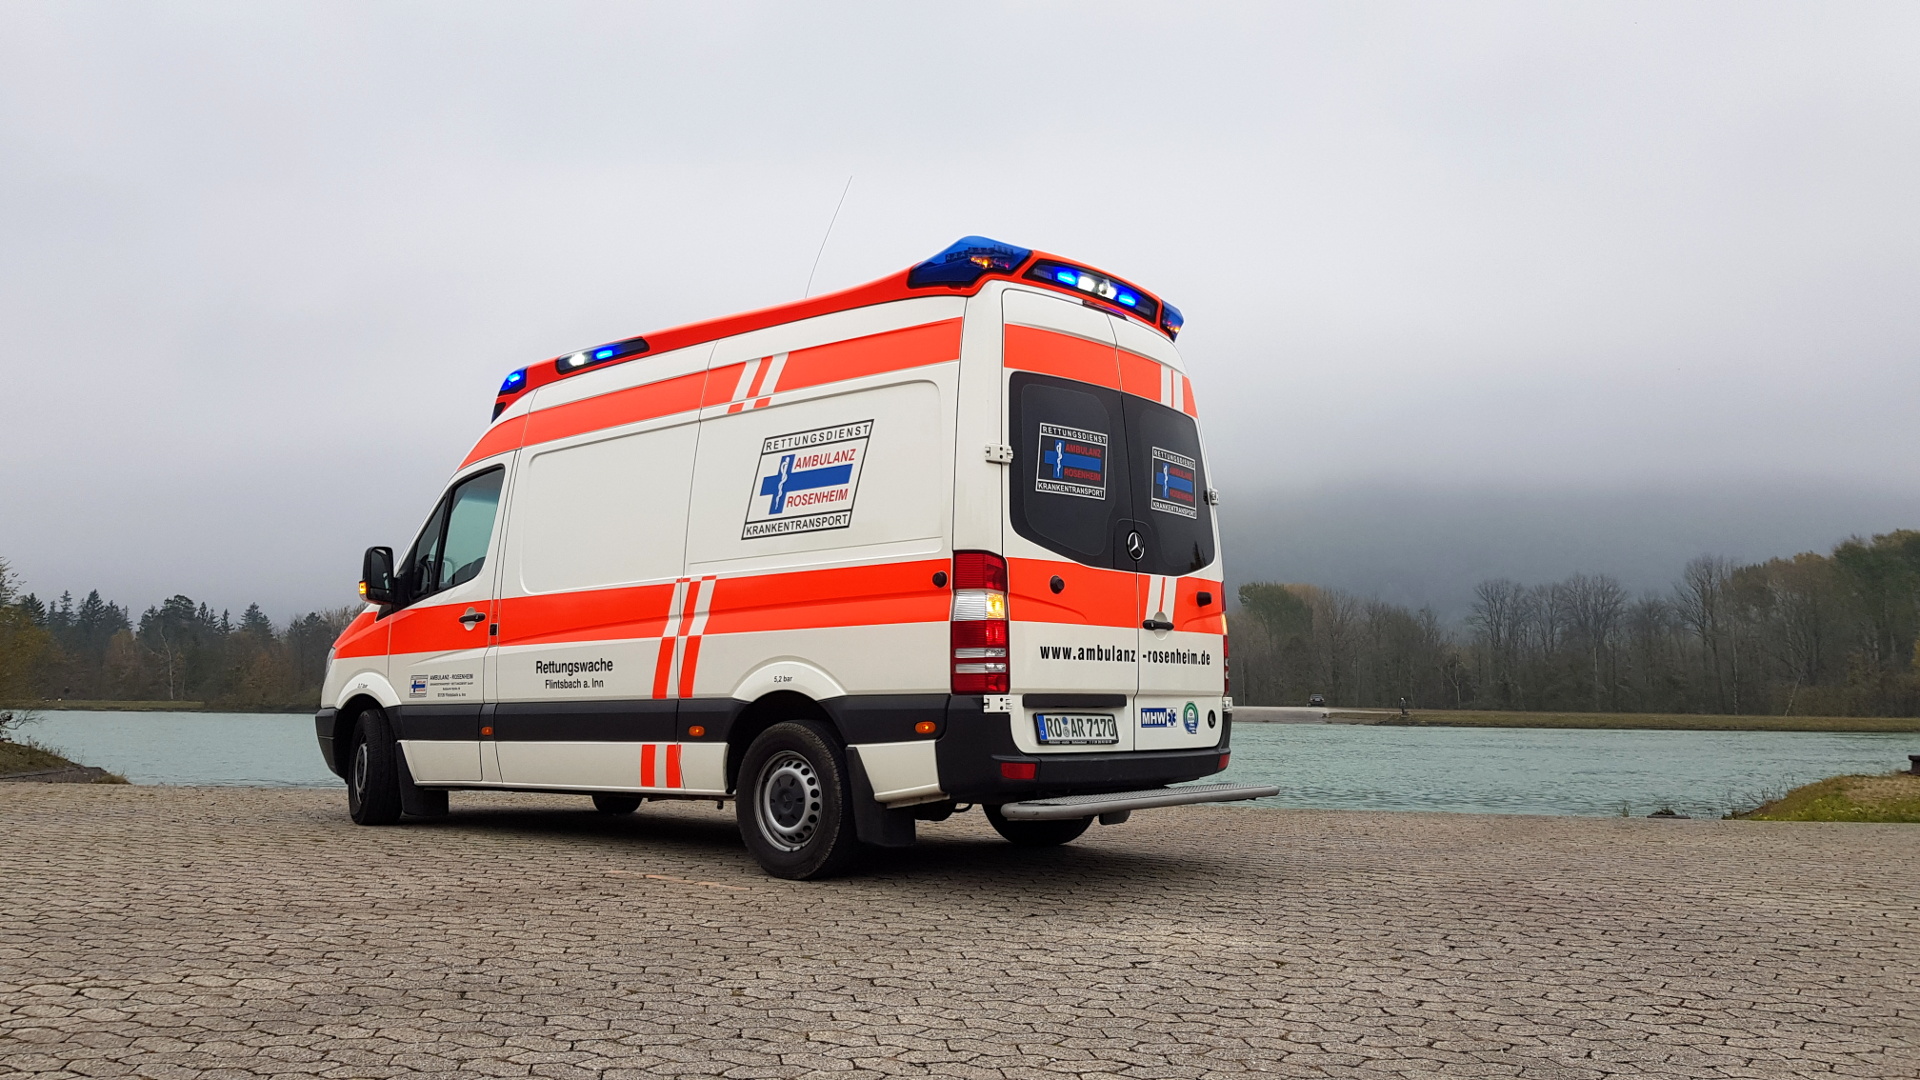 Rettungswagen Ambulanz Rosenheim